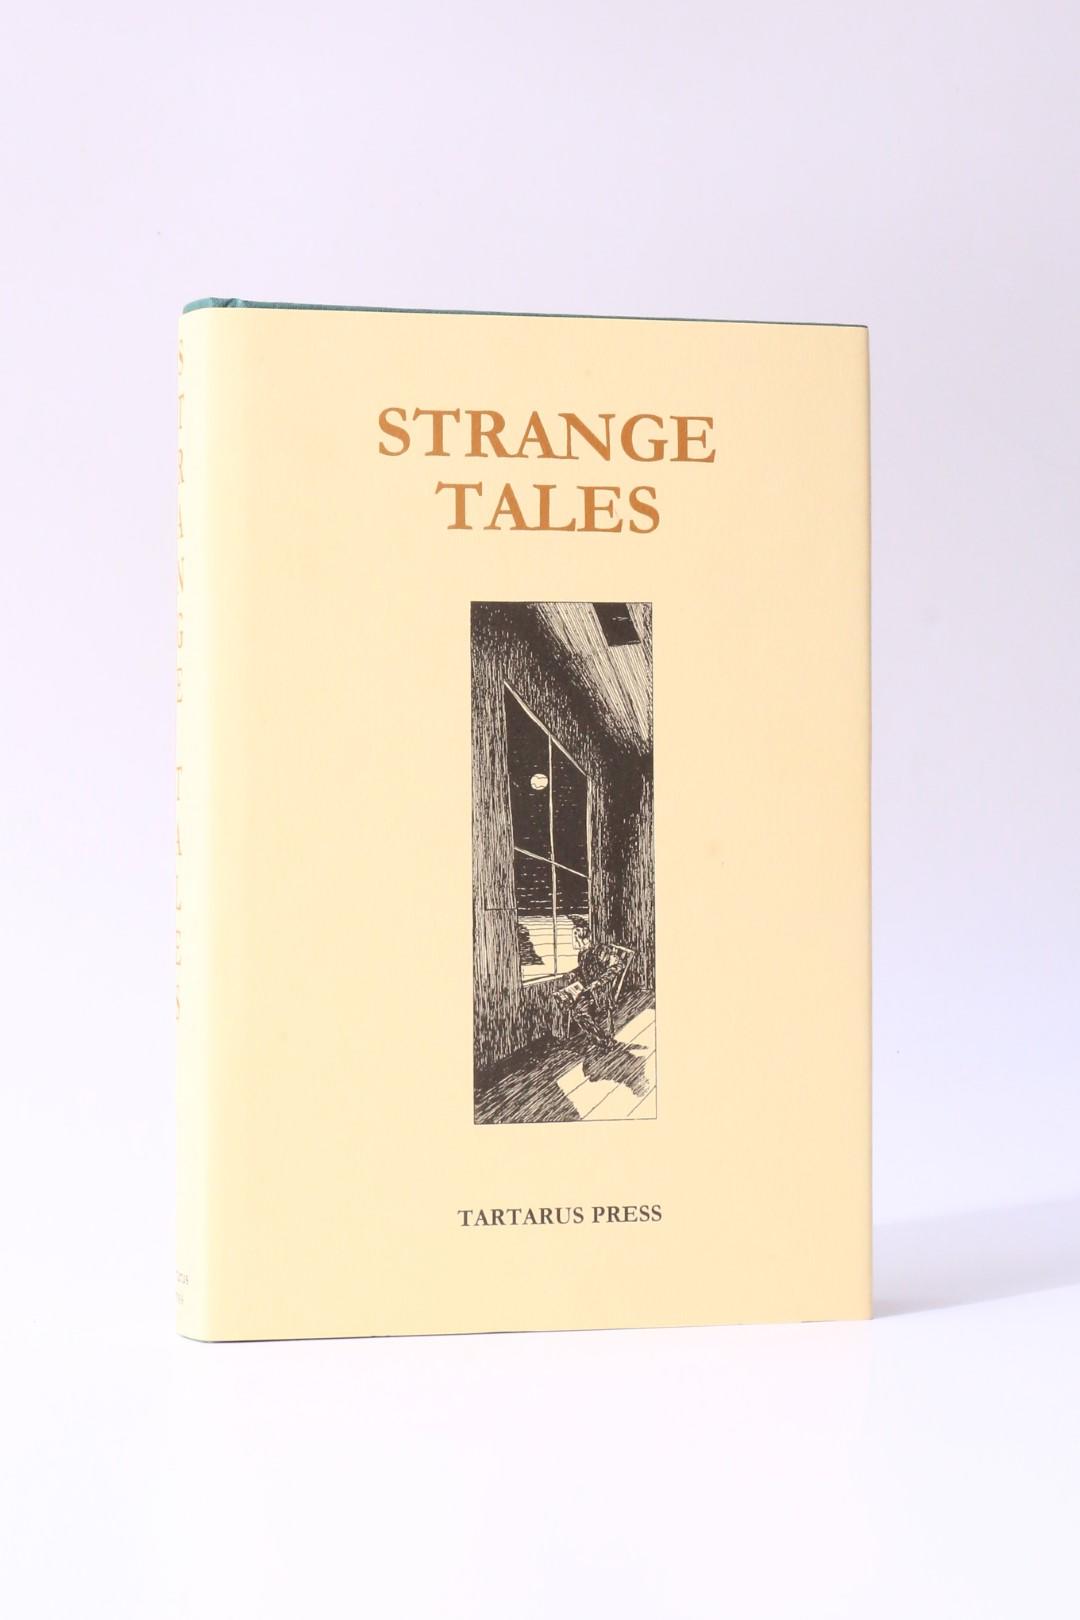 Rosalie Parker [ed.] - Strange Tales - Tartarus Press, 2003, Limited Edition.